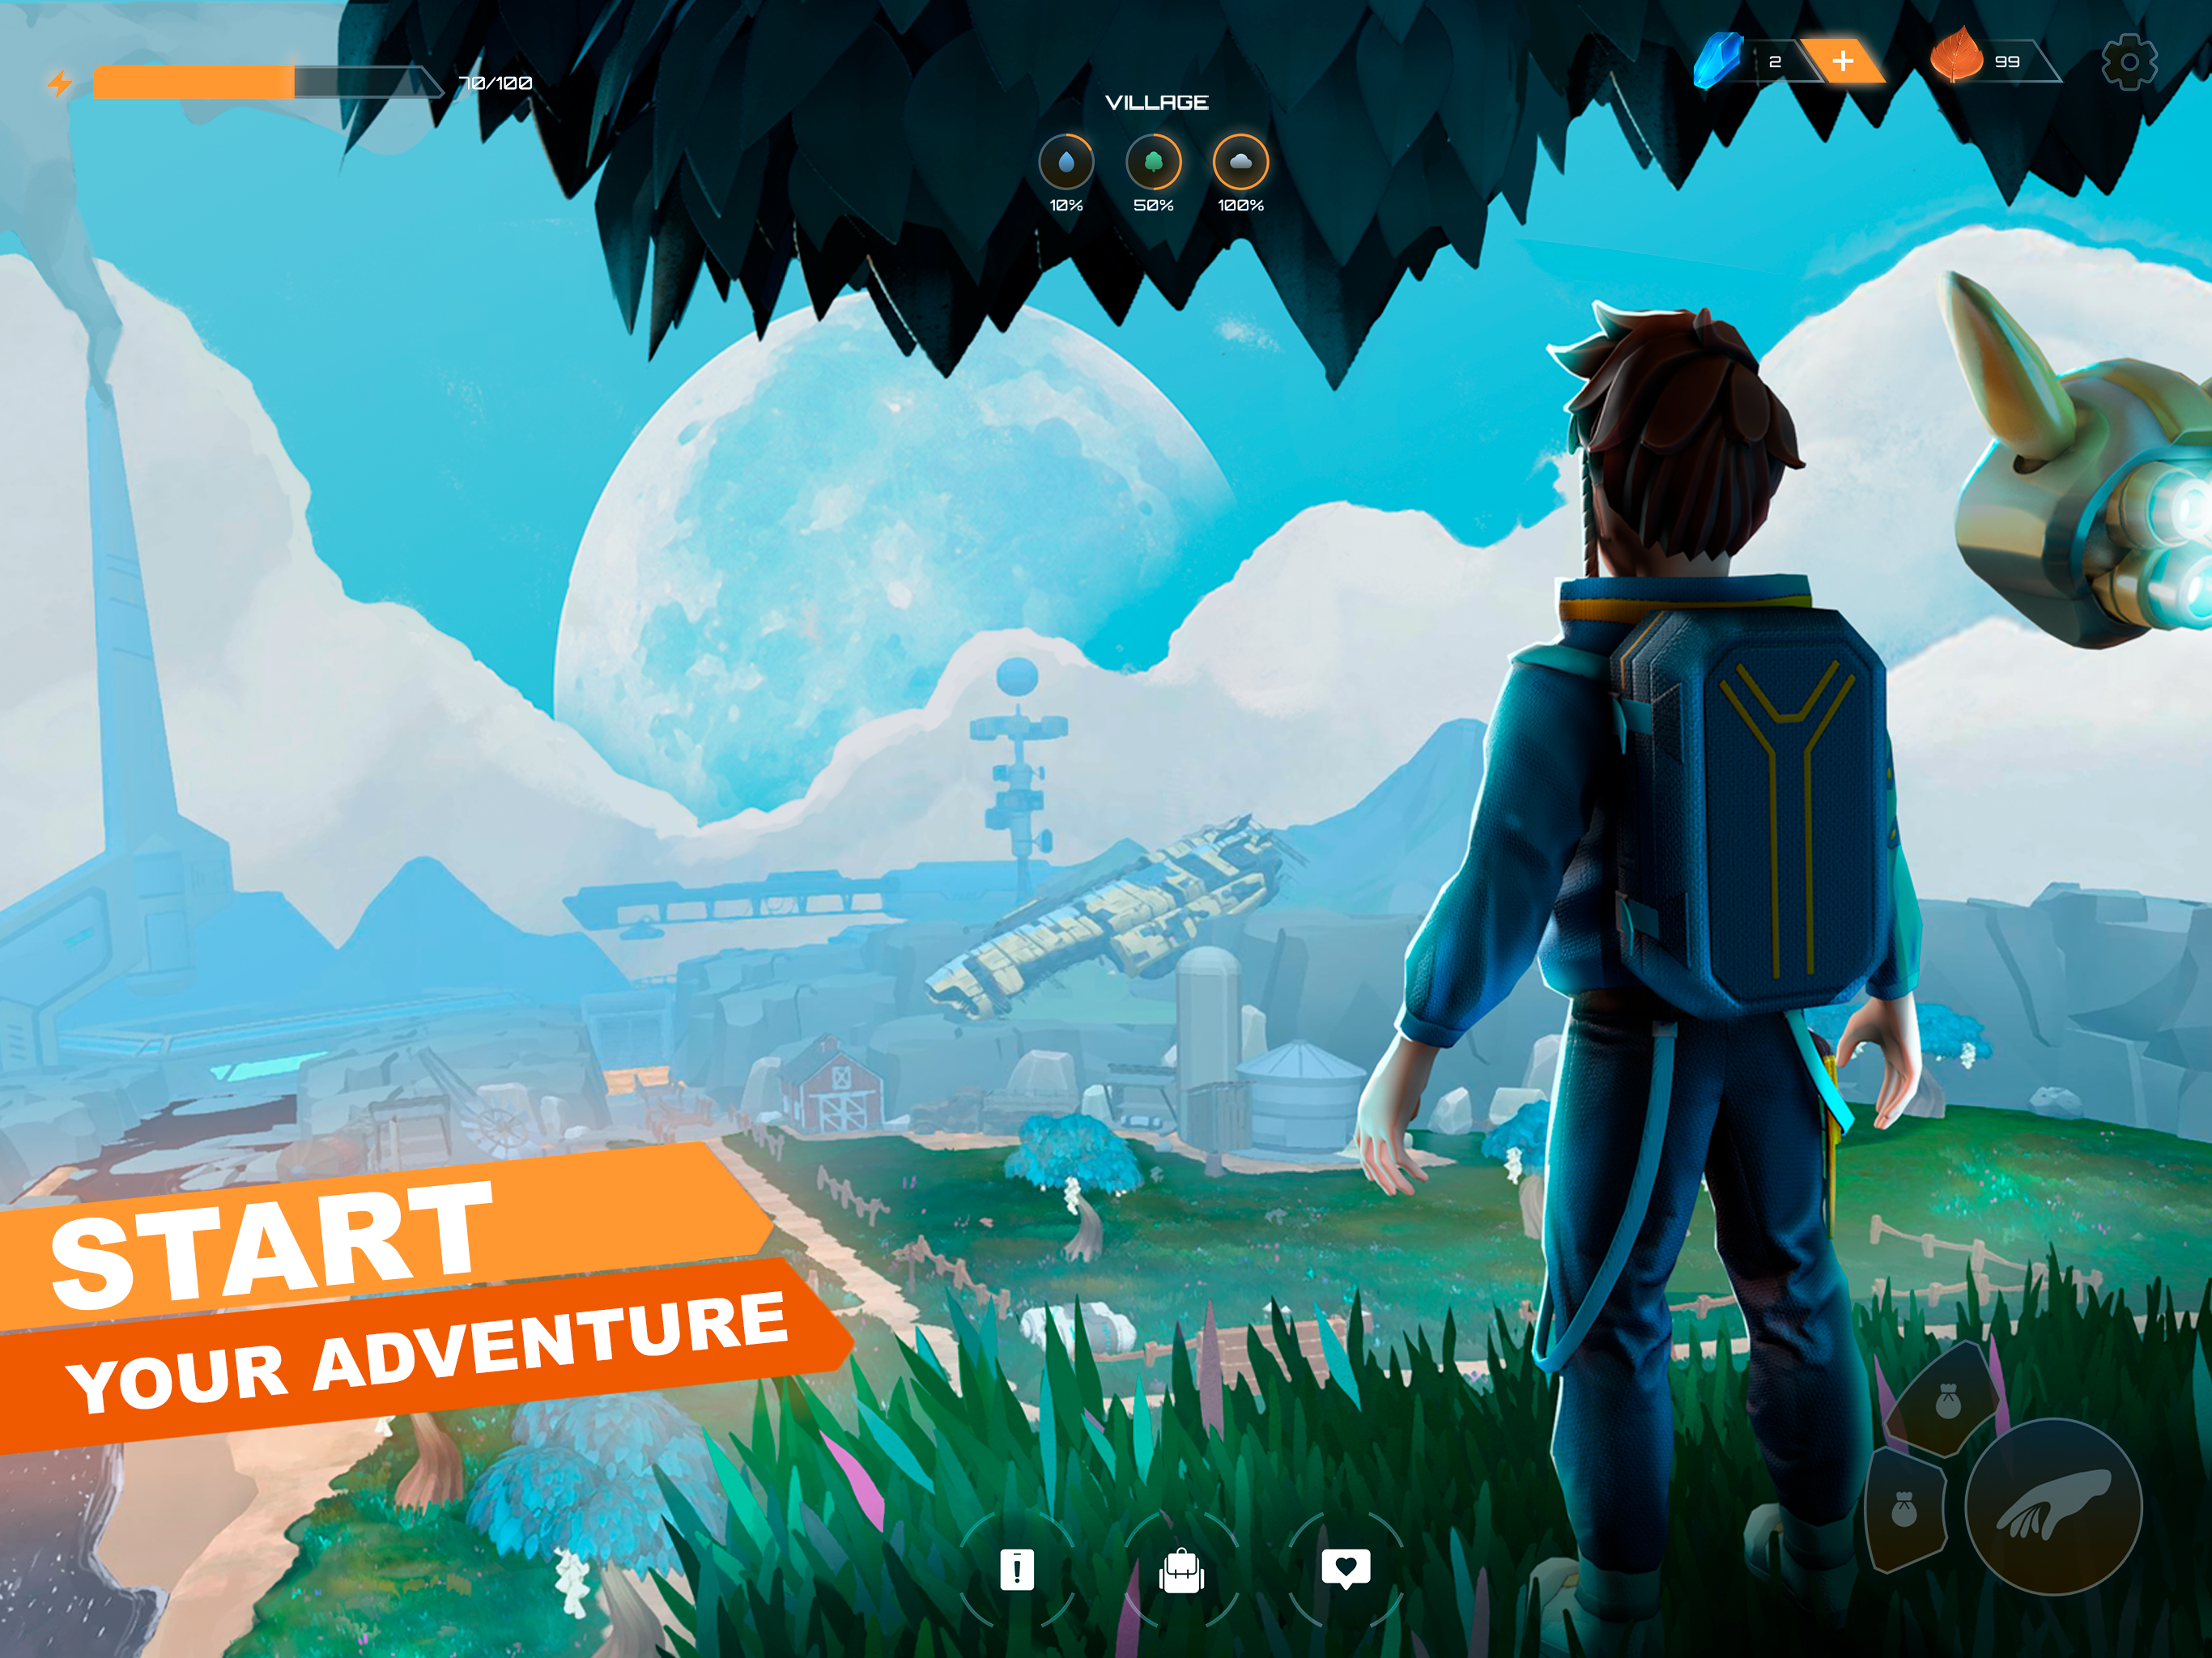 Ecotopia: Farm Adventure screenshot game